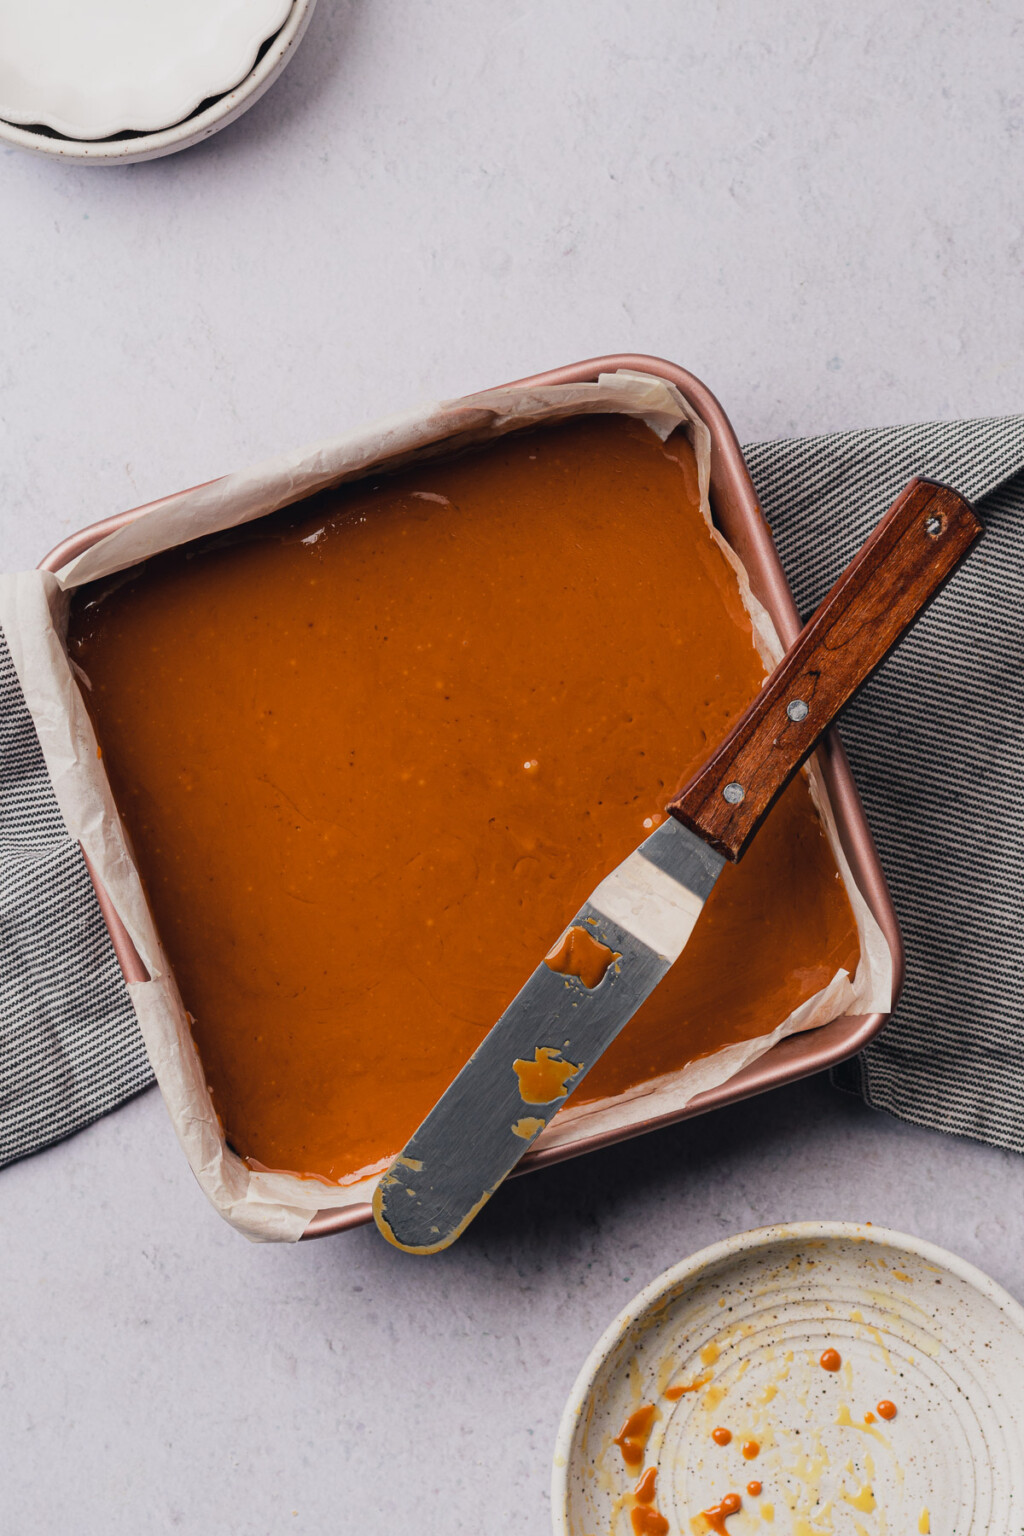 Gluten Free Caramel Slice - Keto Millionaires Shortbread - A Full Living